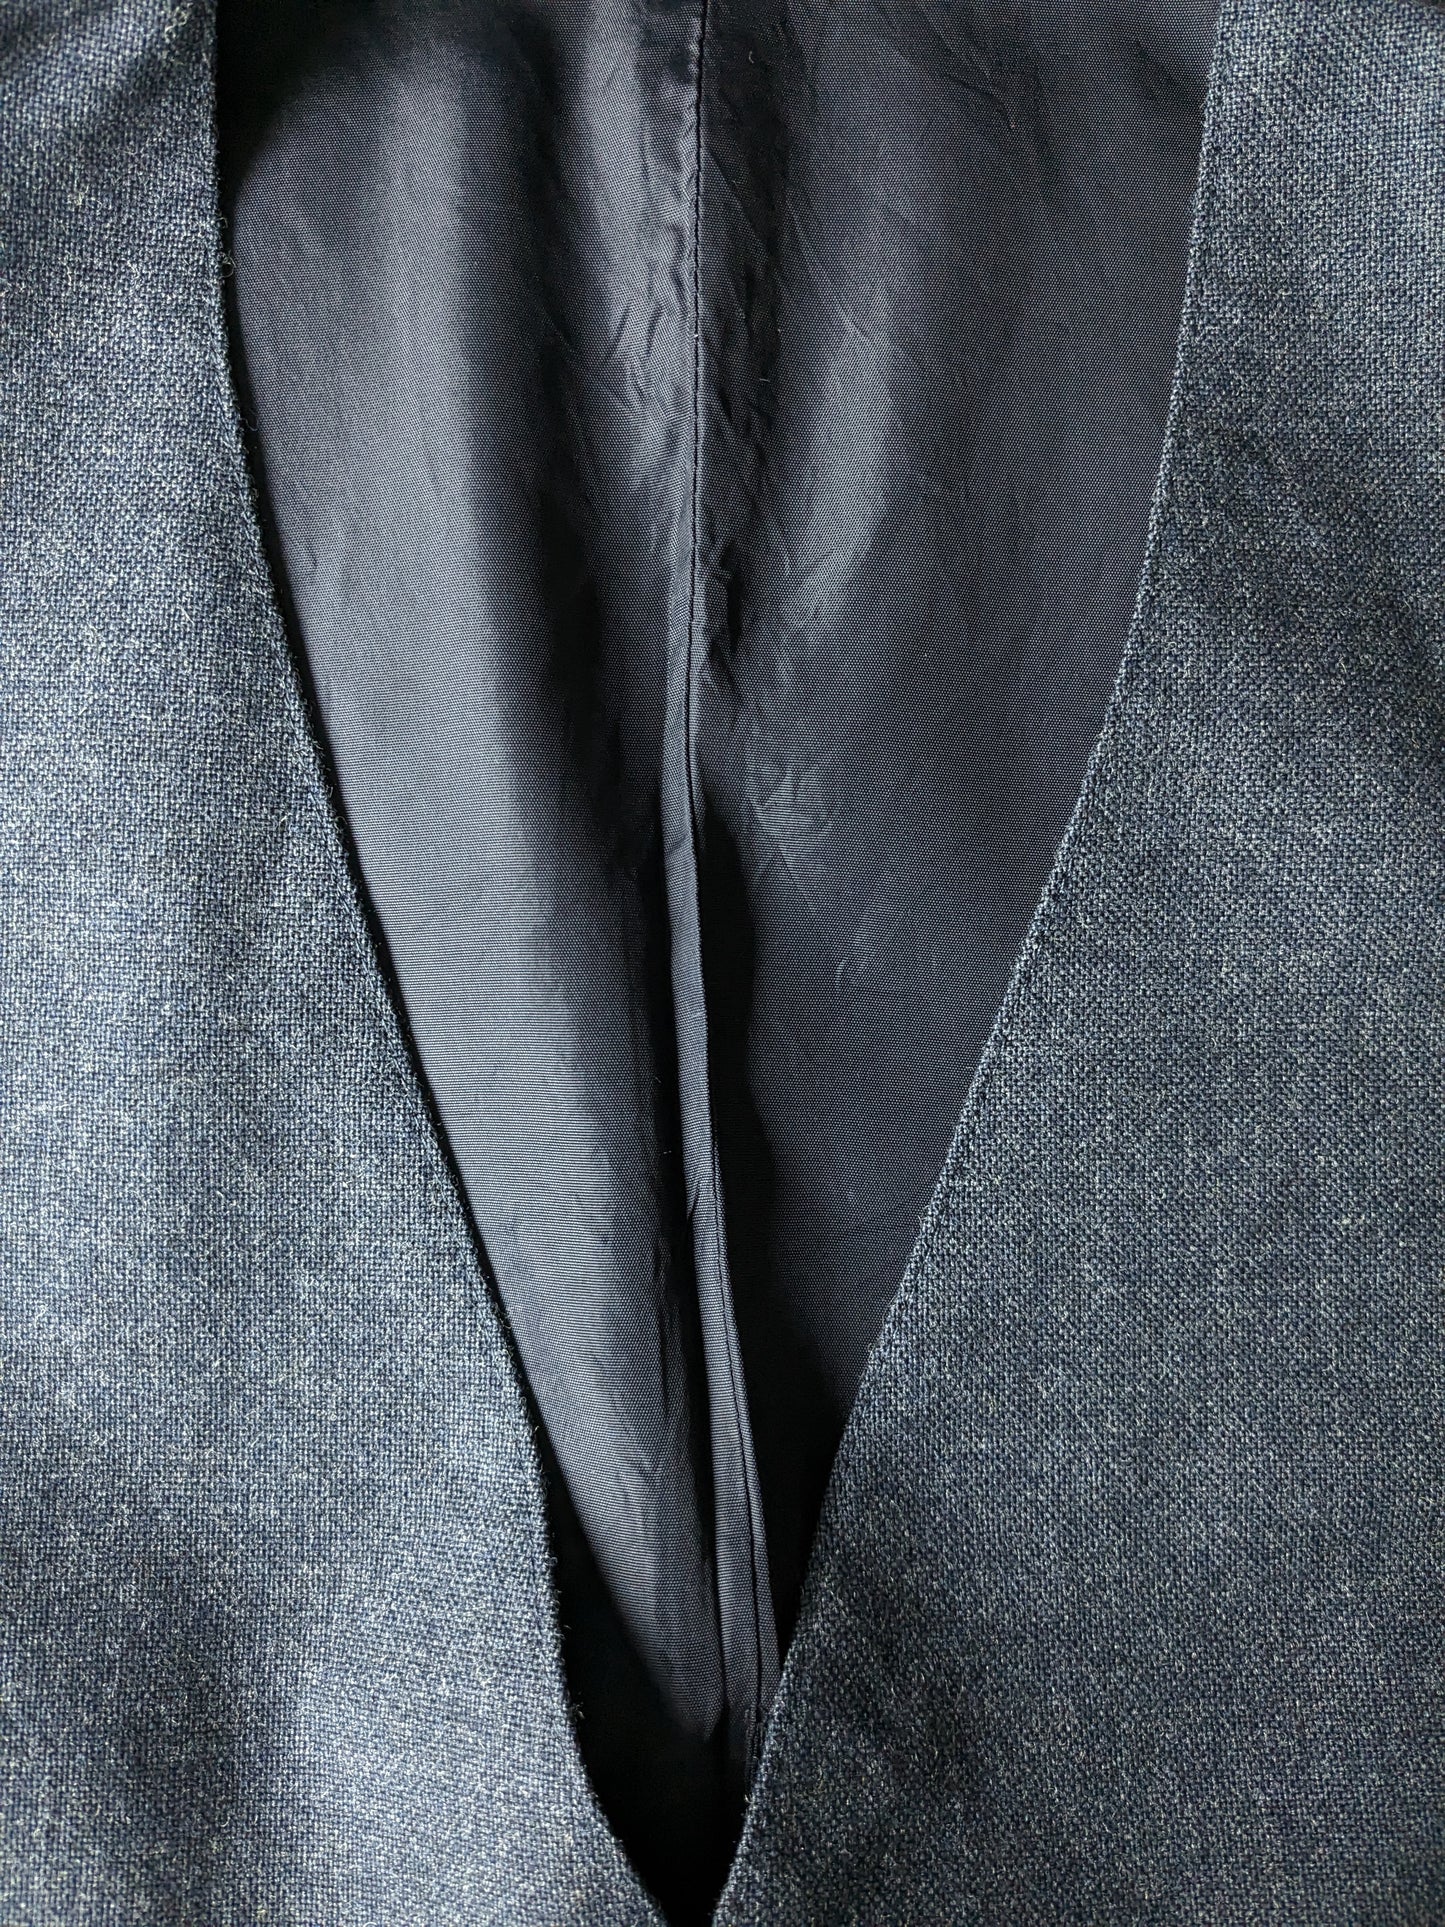 Chaleco. Motivo azul gris oscuro. Talla 54/L.